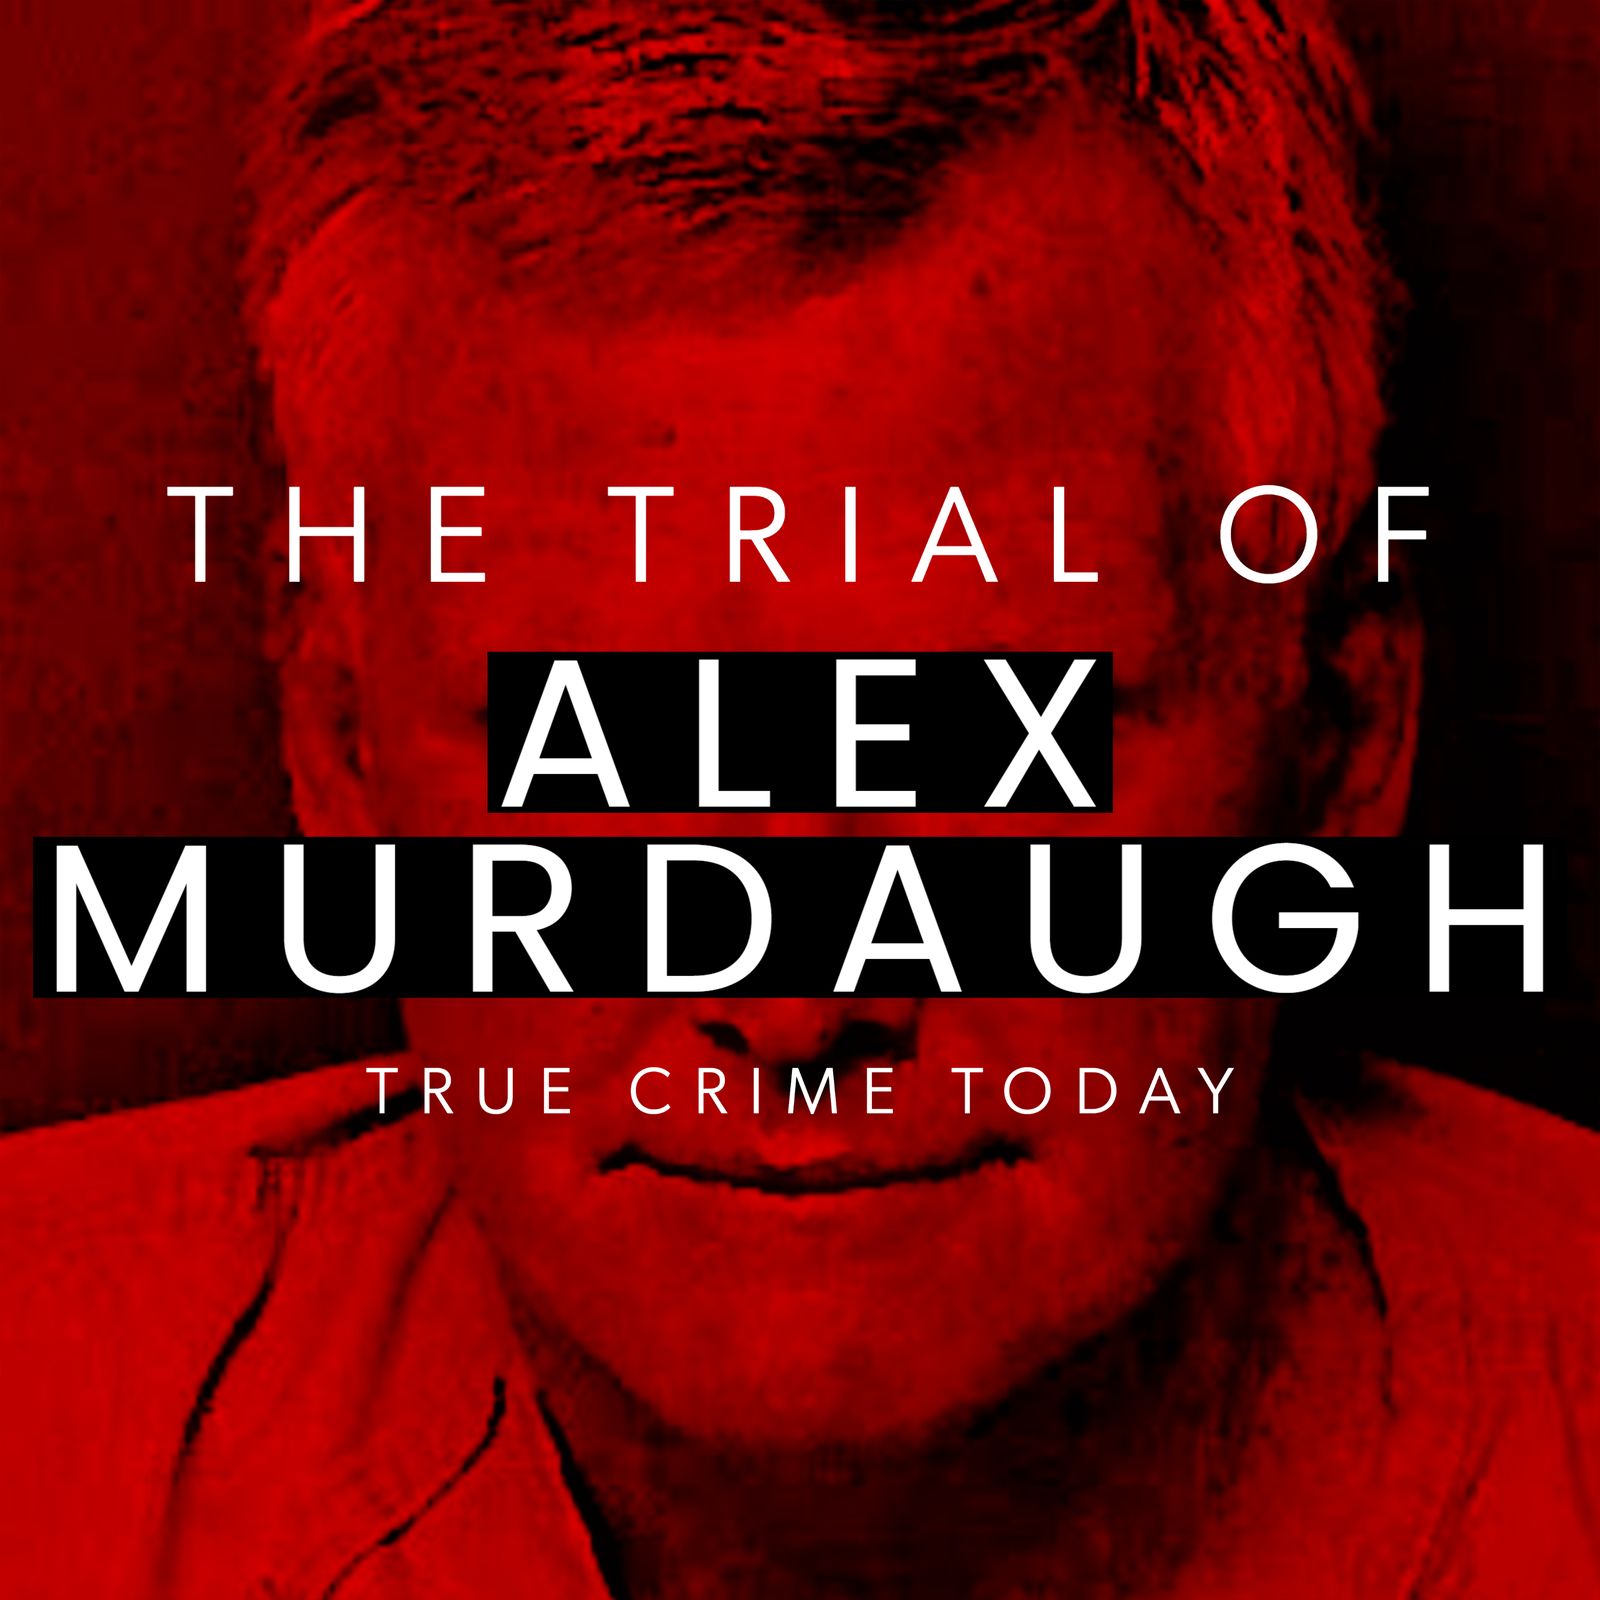 Murdaugh's Web of Deceit: Accomplices' Trials Set to Expose Dark Underbelly of Criminal Empire